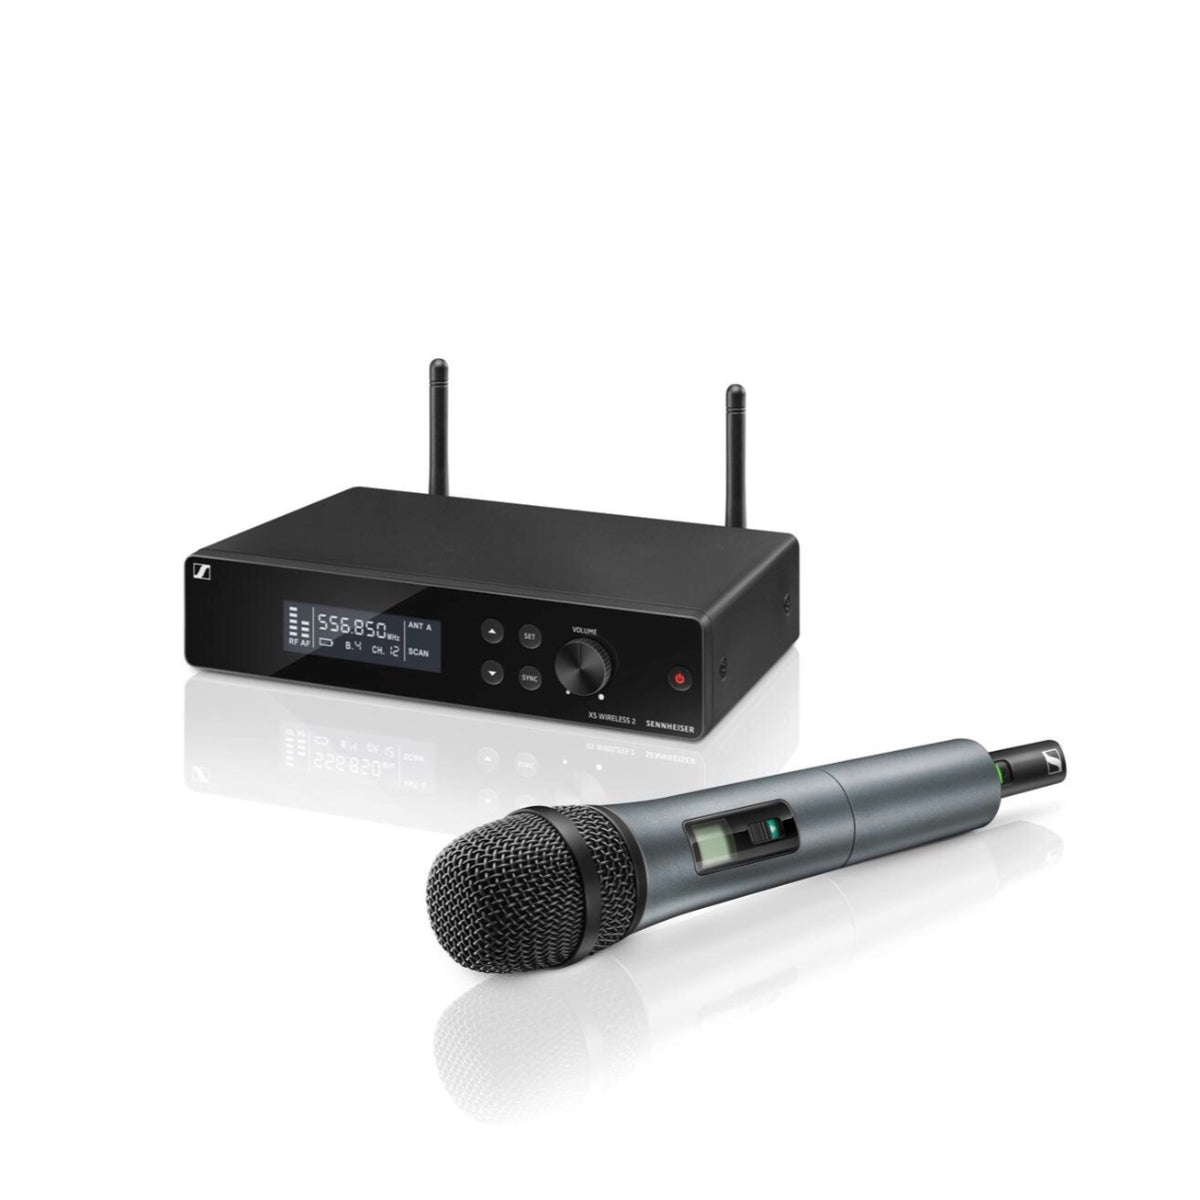 Sennheiser XSW 2-835-B Wireless Handheld Vocal Set, 614-638MHz